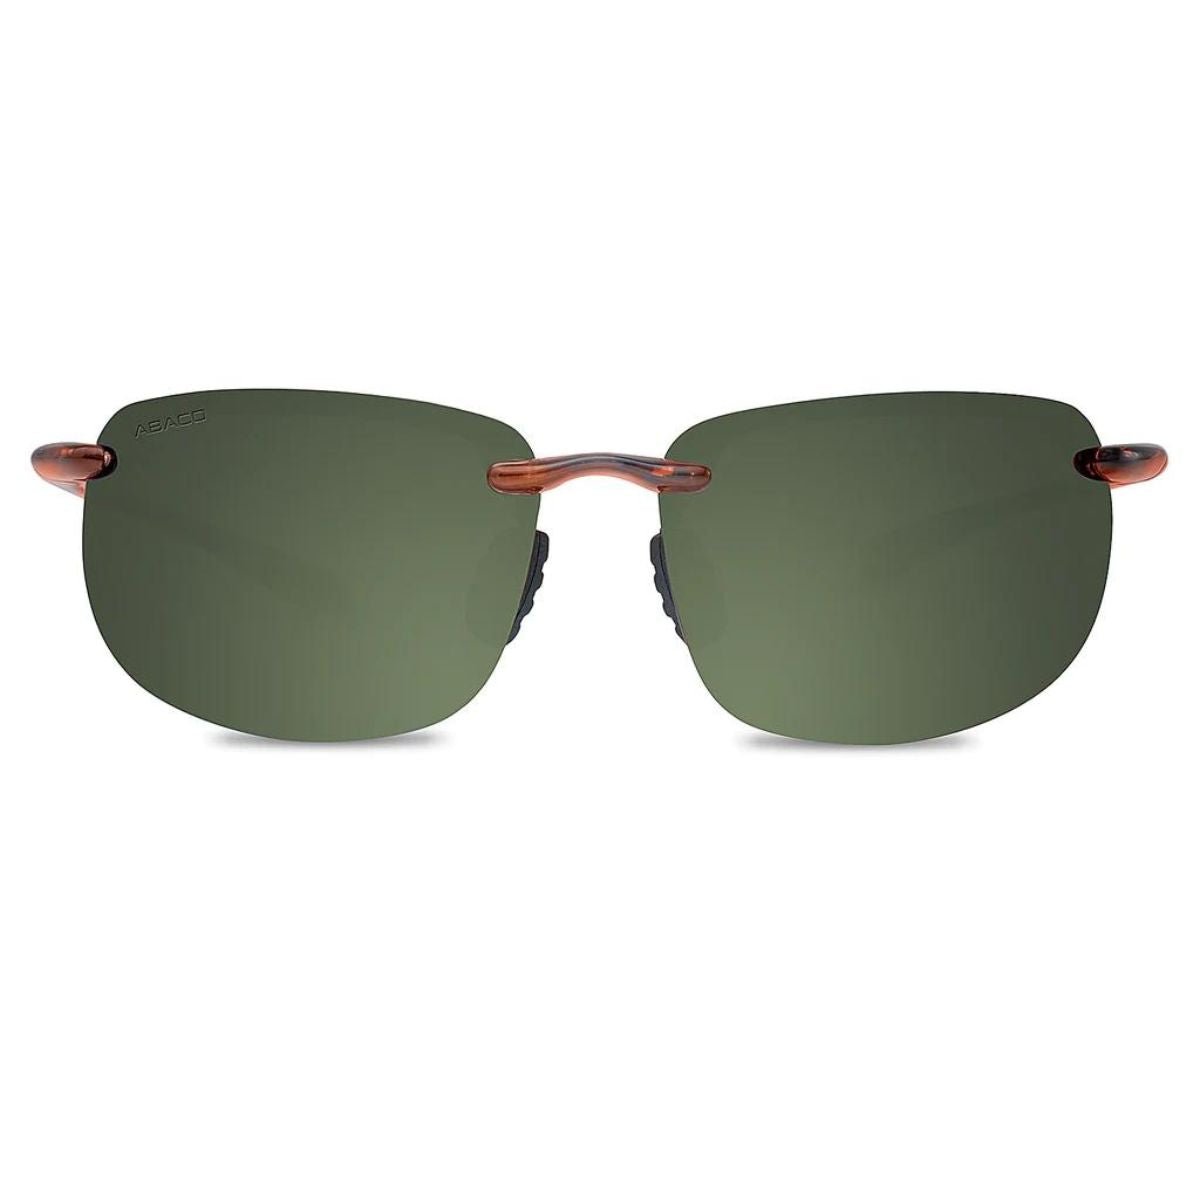 Abaco Outrigger Sunglasses in Tortoise/G15 - BoardCo